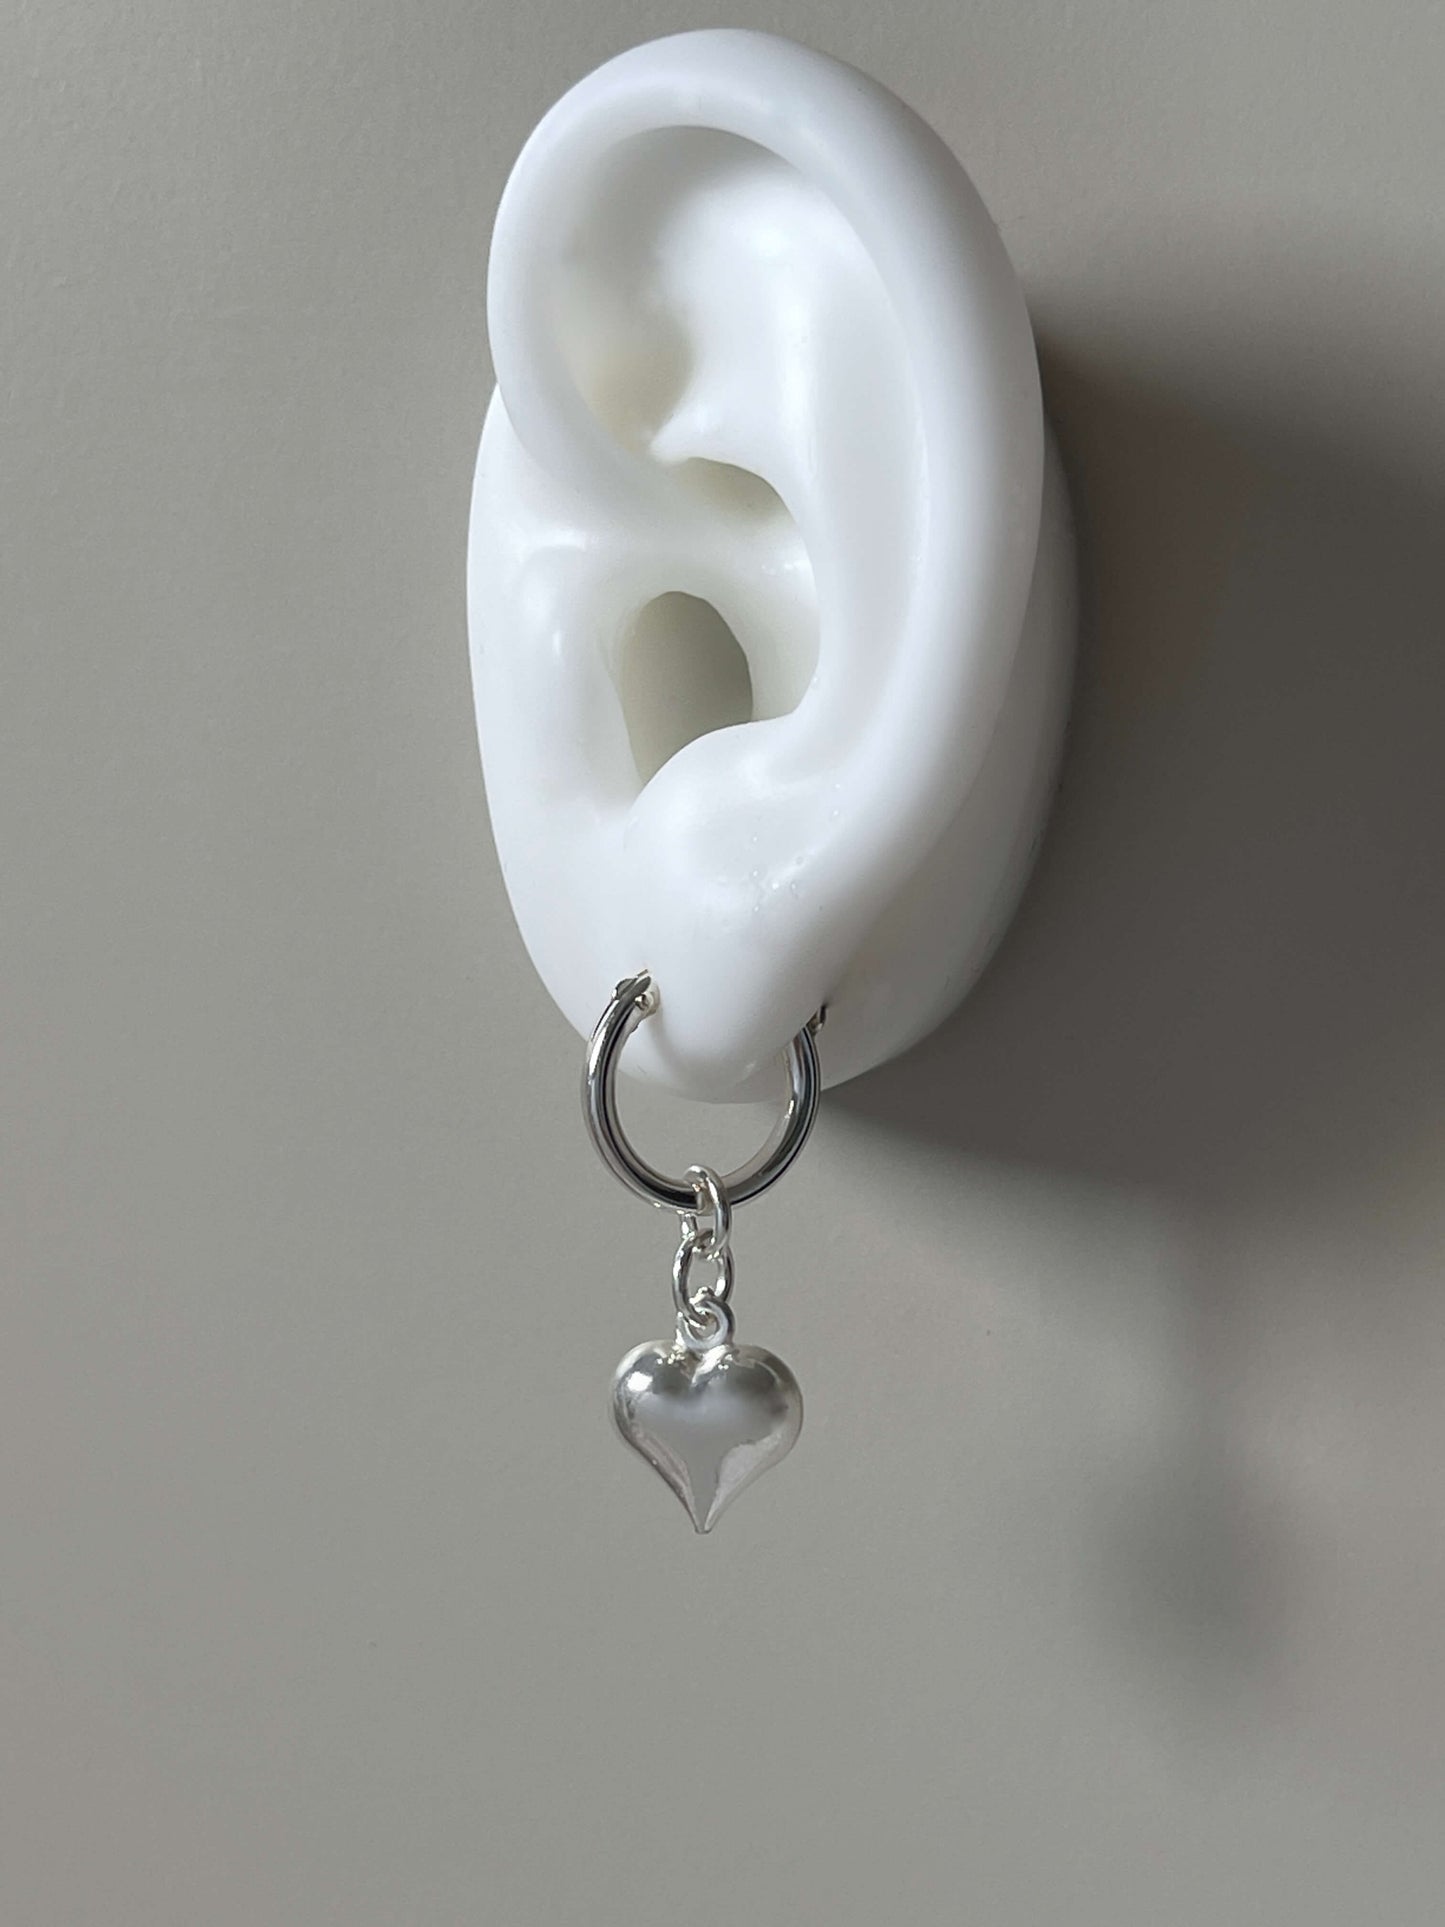 Pure heart mini earrings